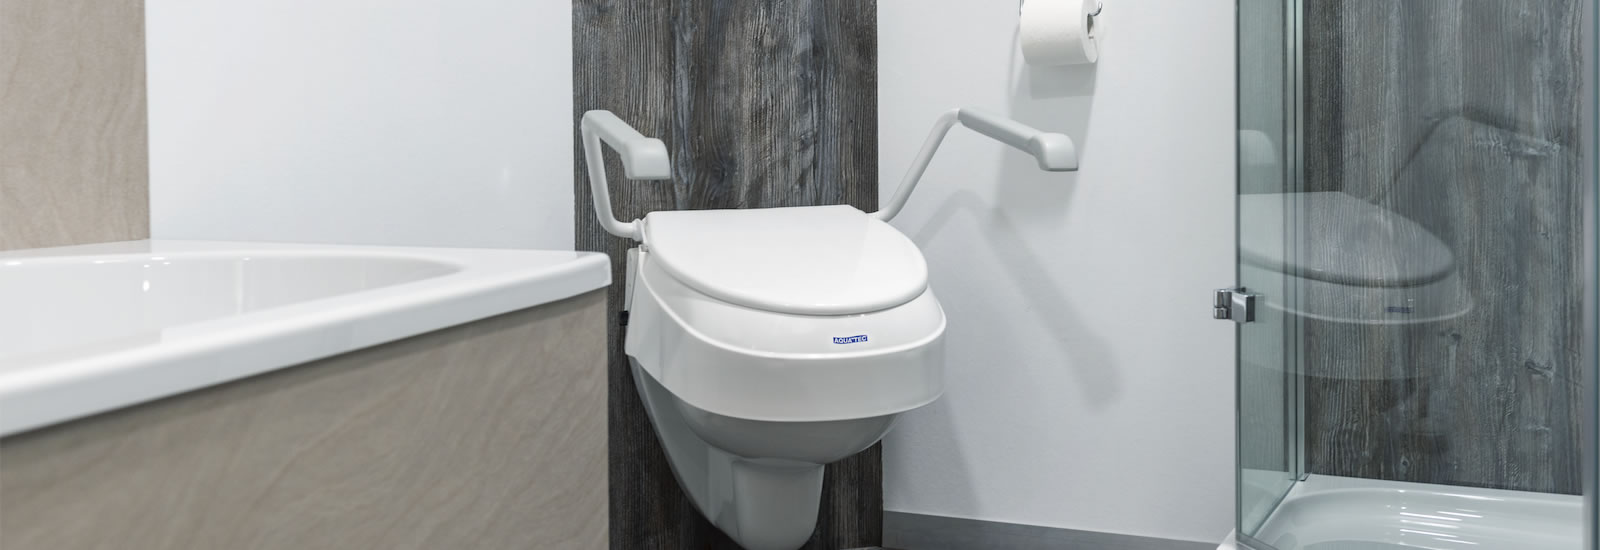 Réhausse WC Aquatec 900 - Invacare France